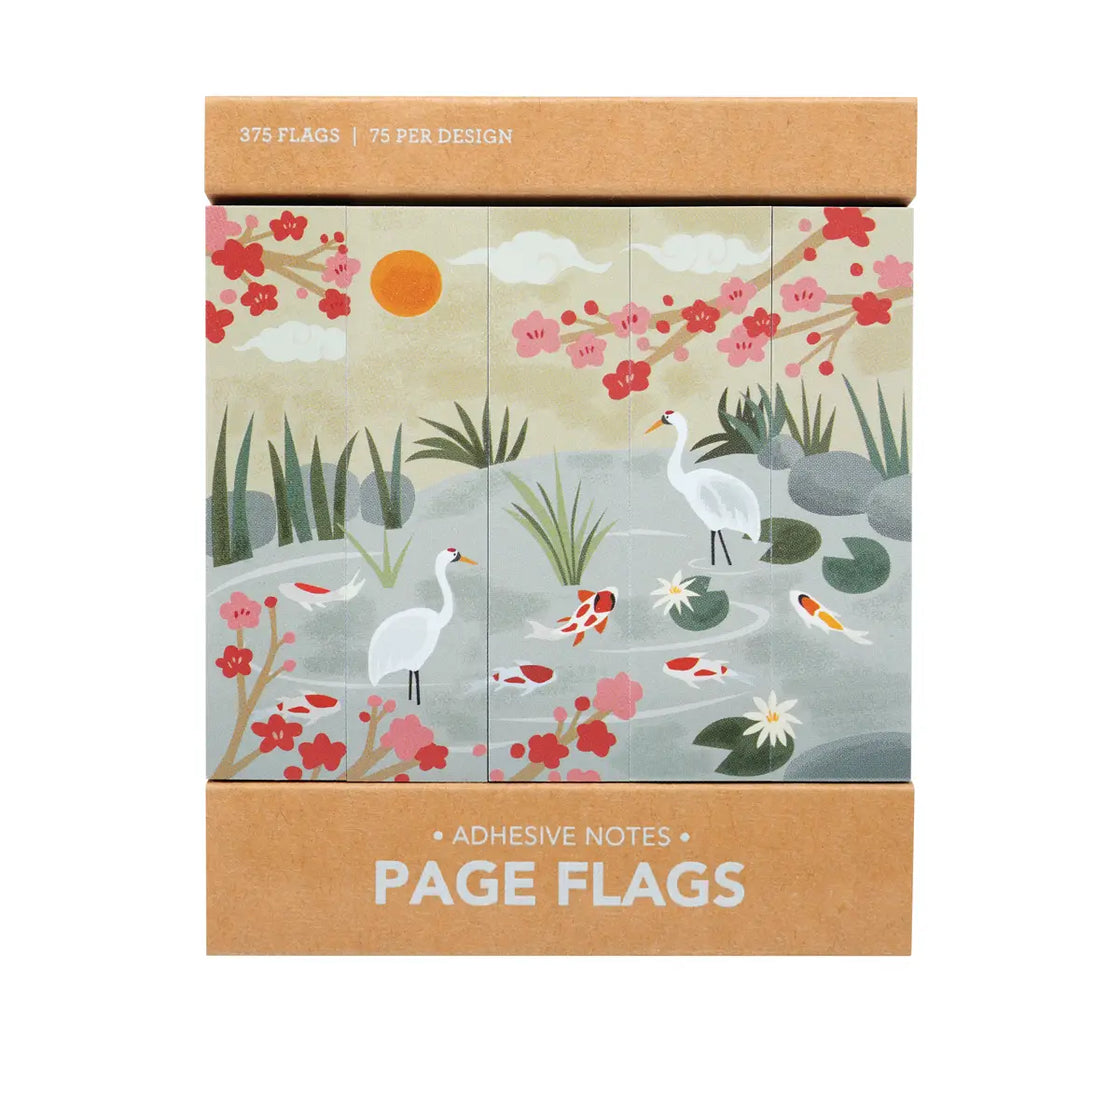 Koi Pond Page Flags